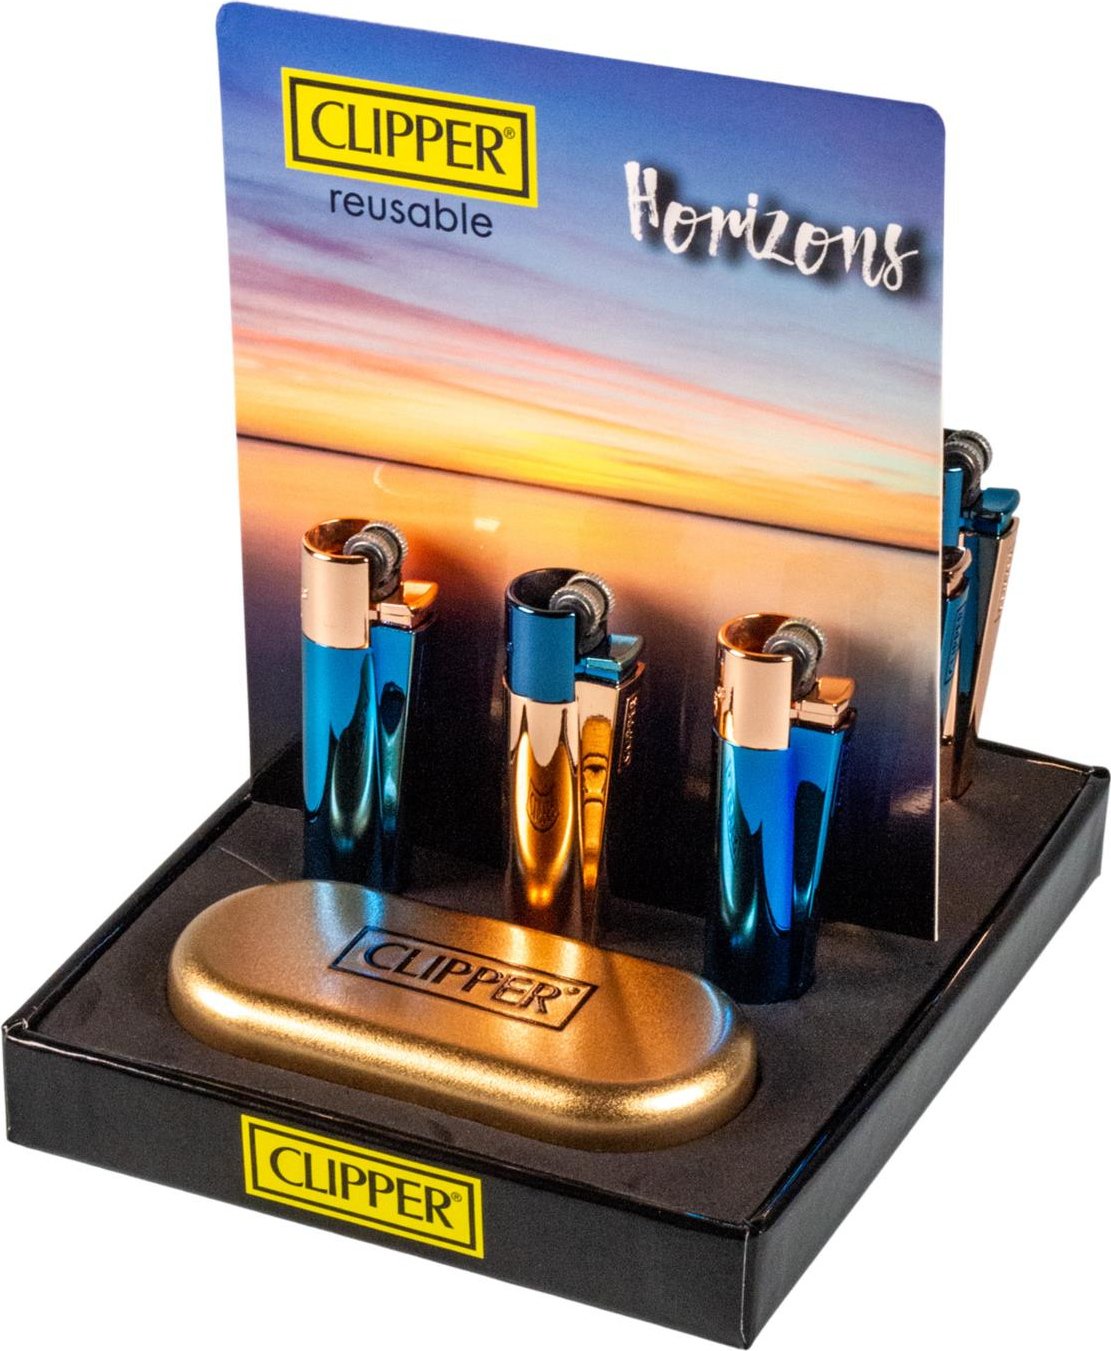 Clipper Lighter Metal - Kiosken Rødbyhavn